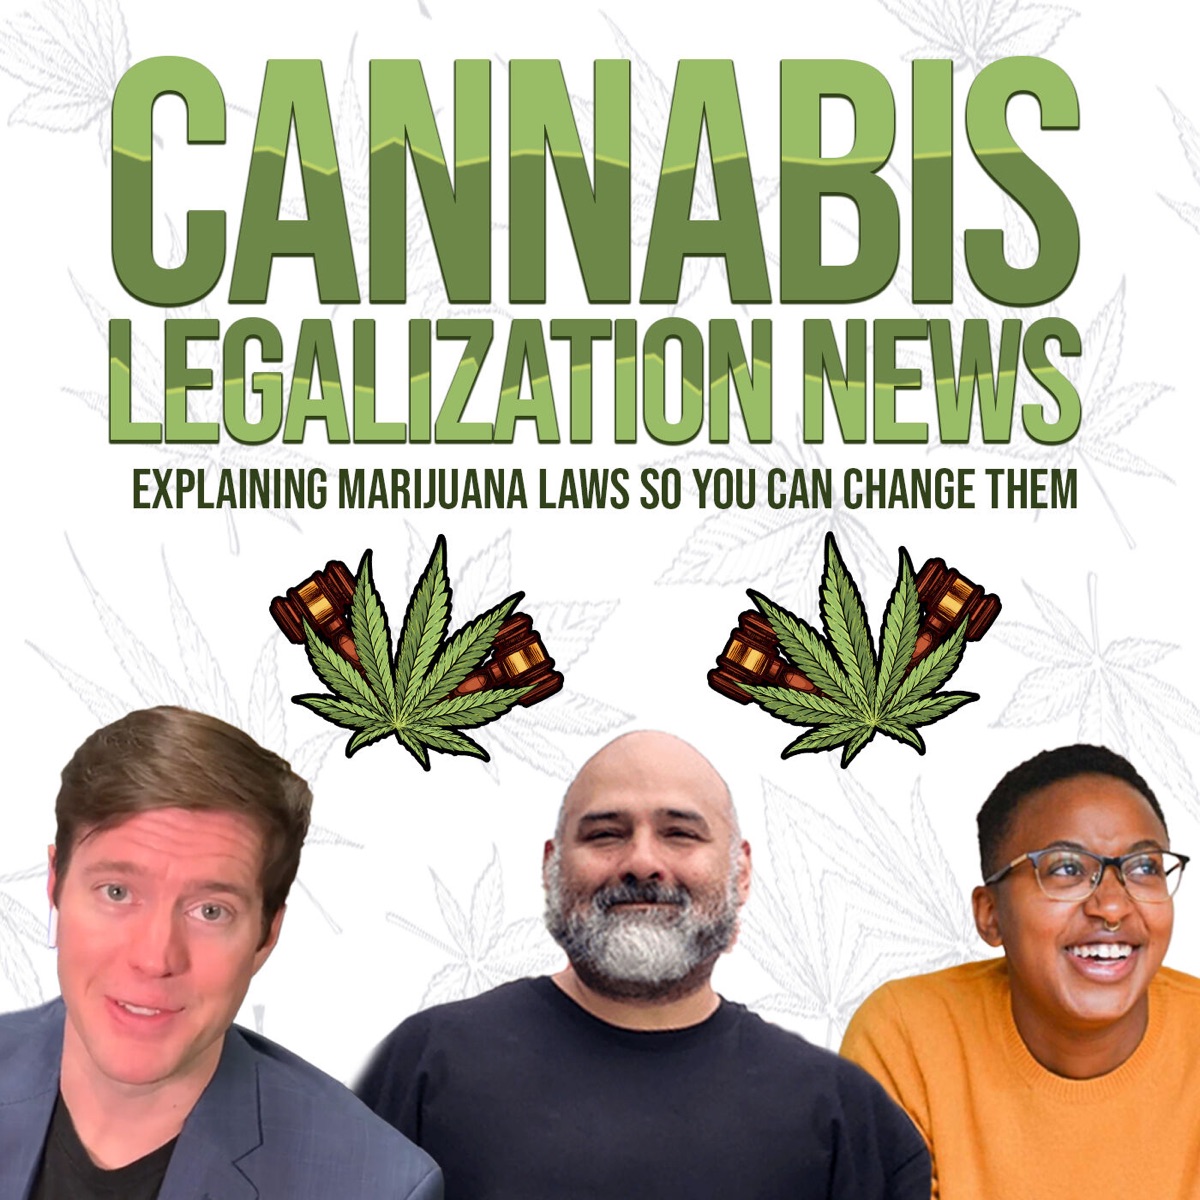 Opinion - Pamarijuana legalization necessary - The Pitt News